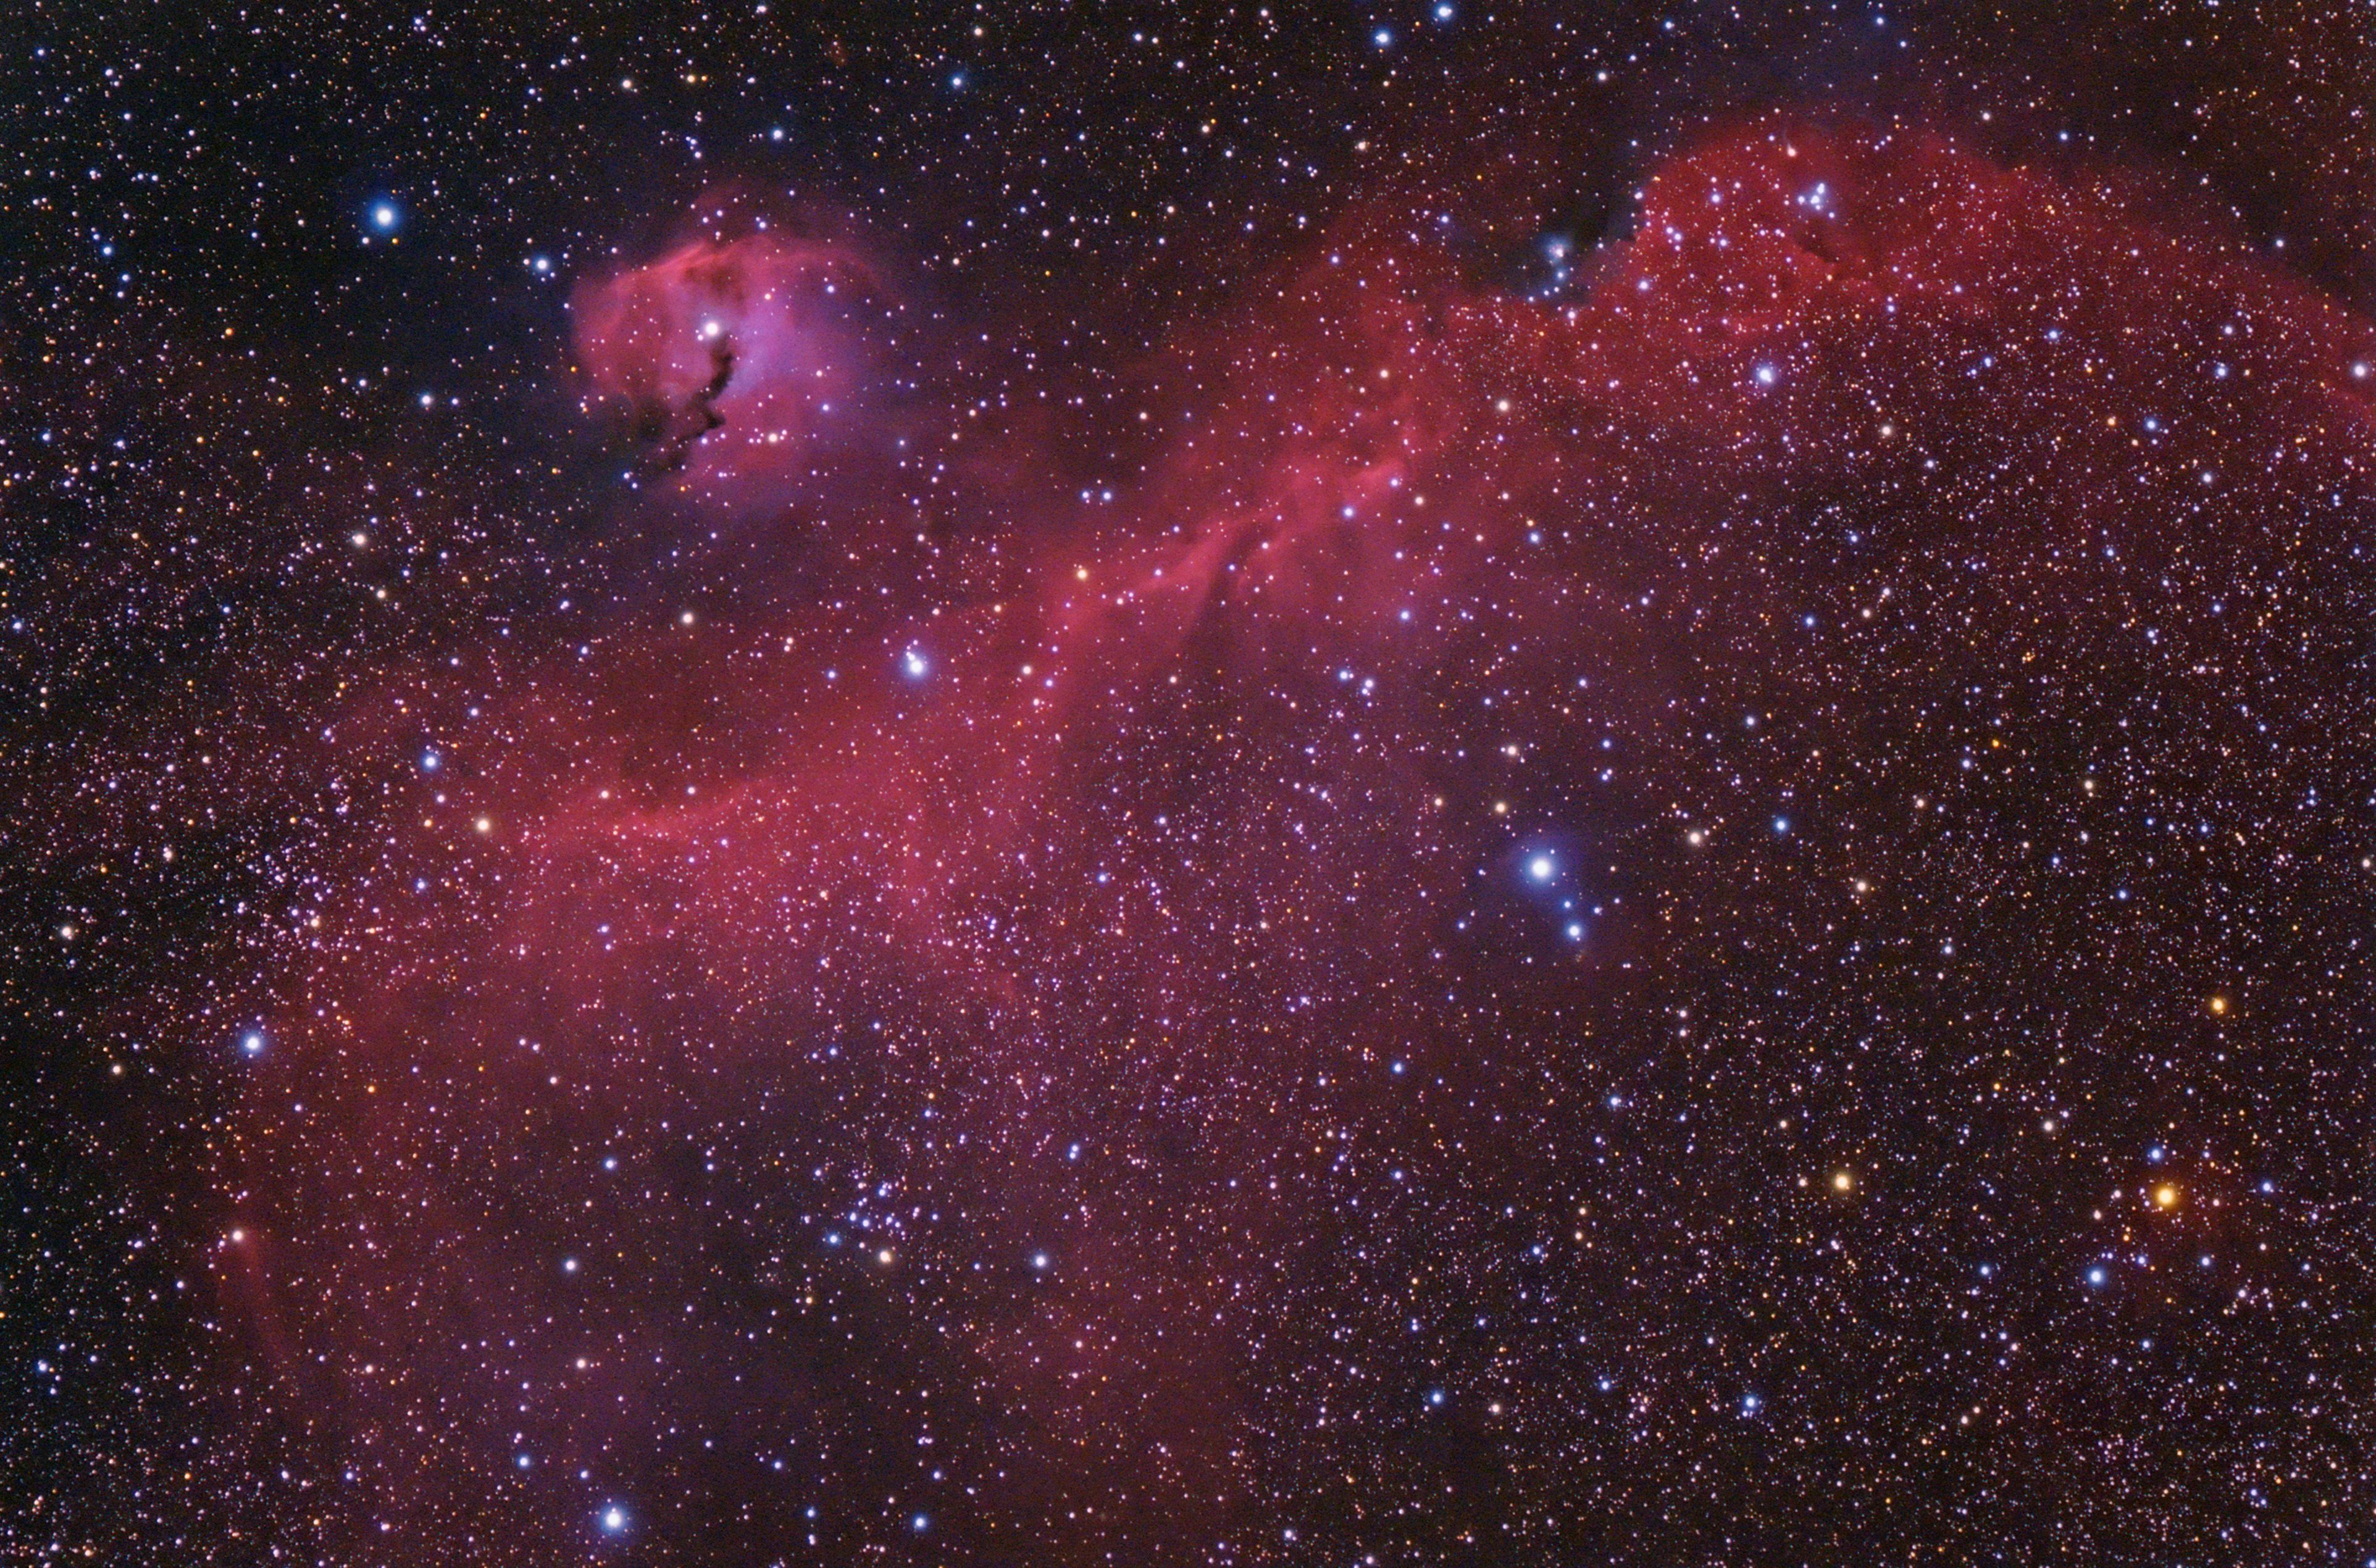 IC2177, Seagull Nebula at Orion Store